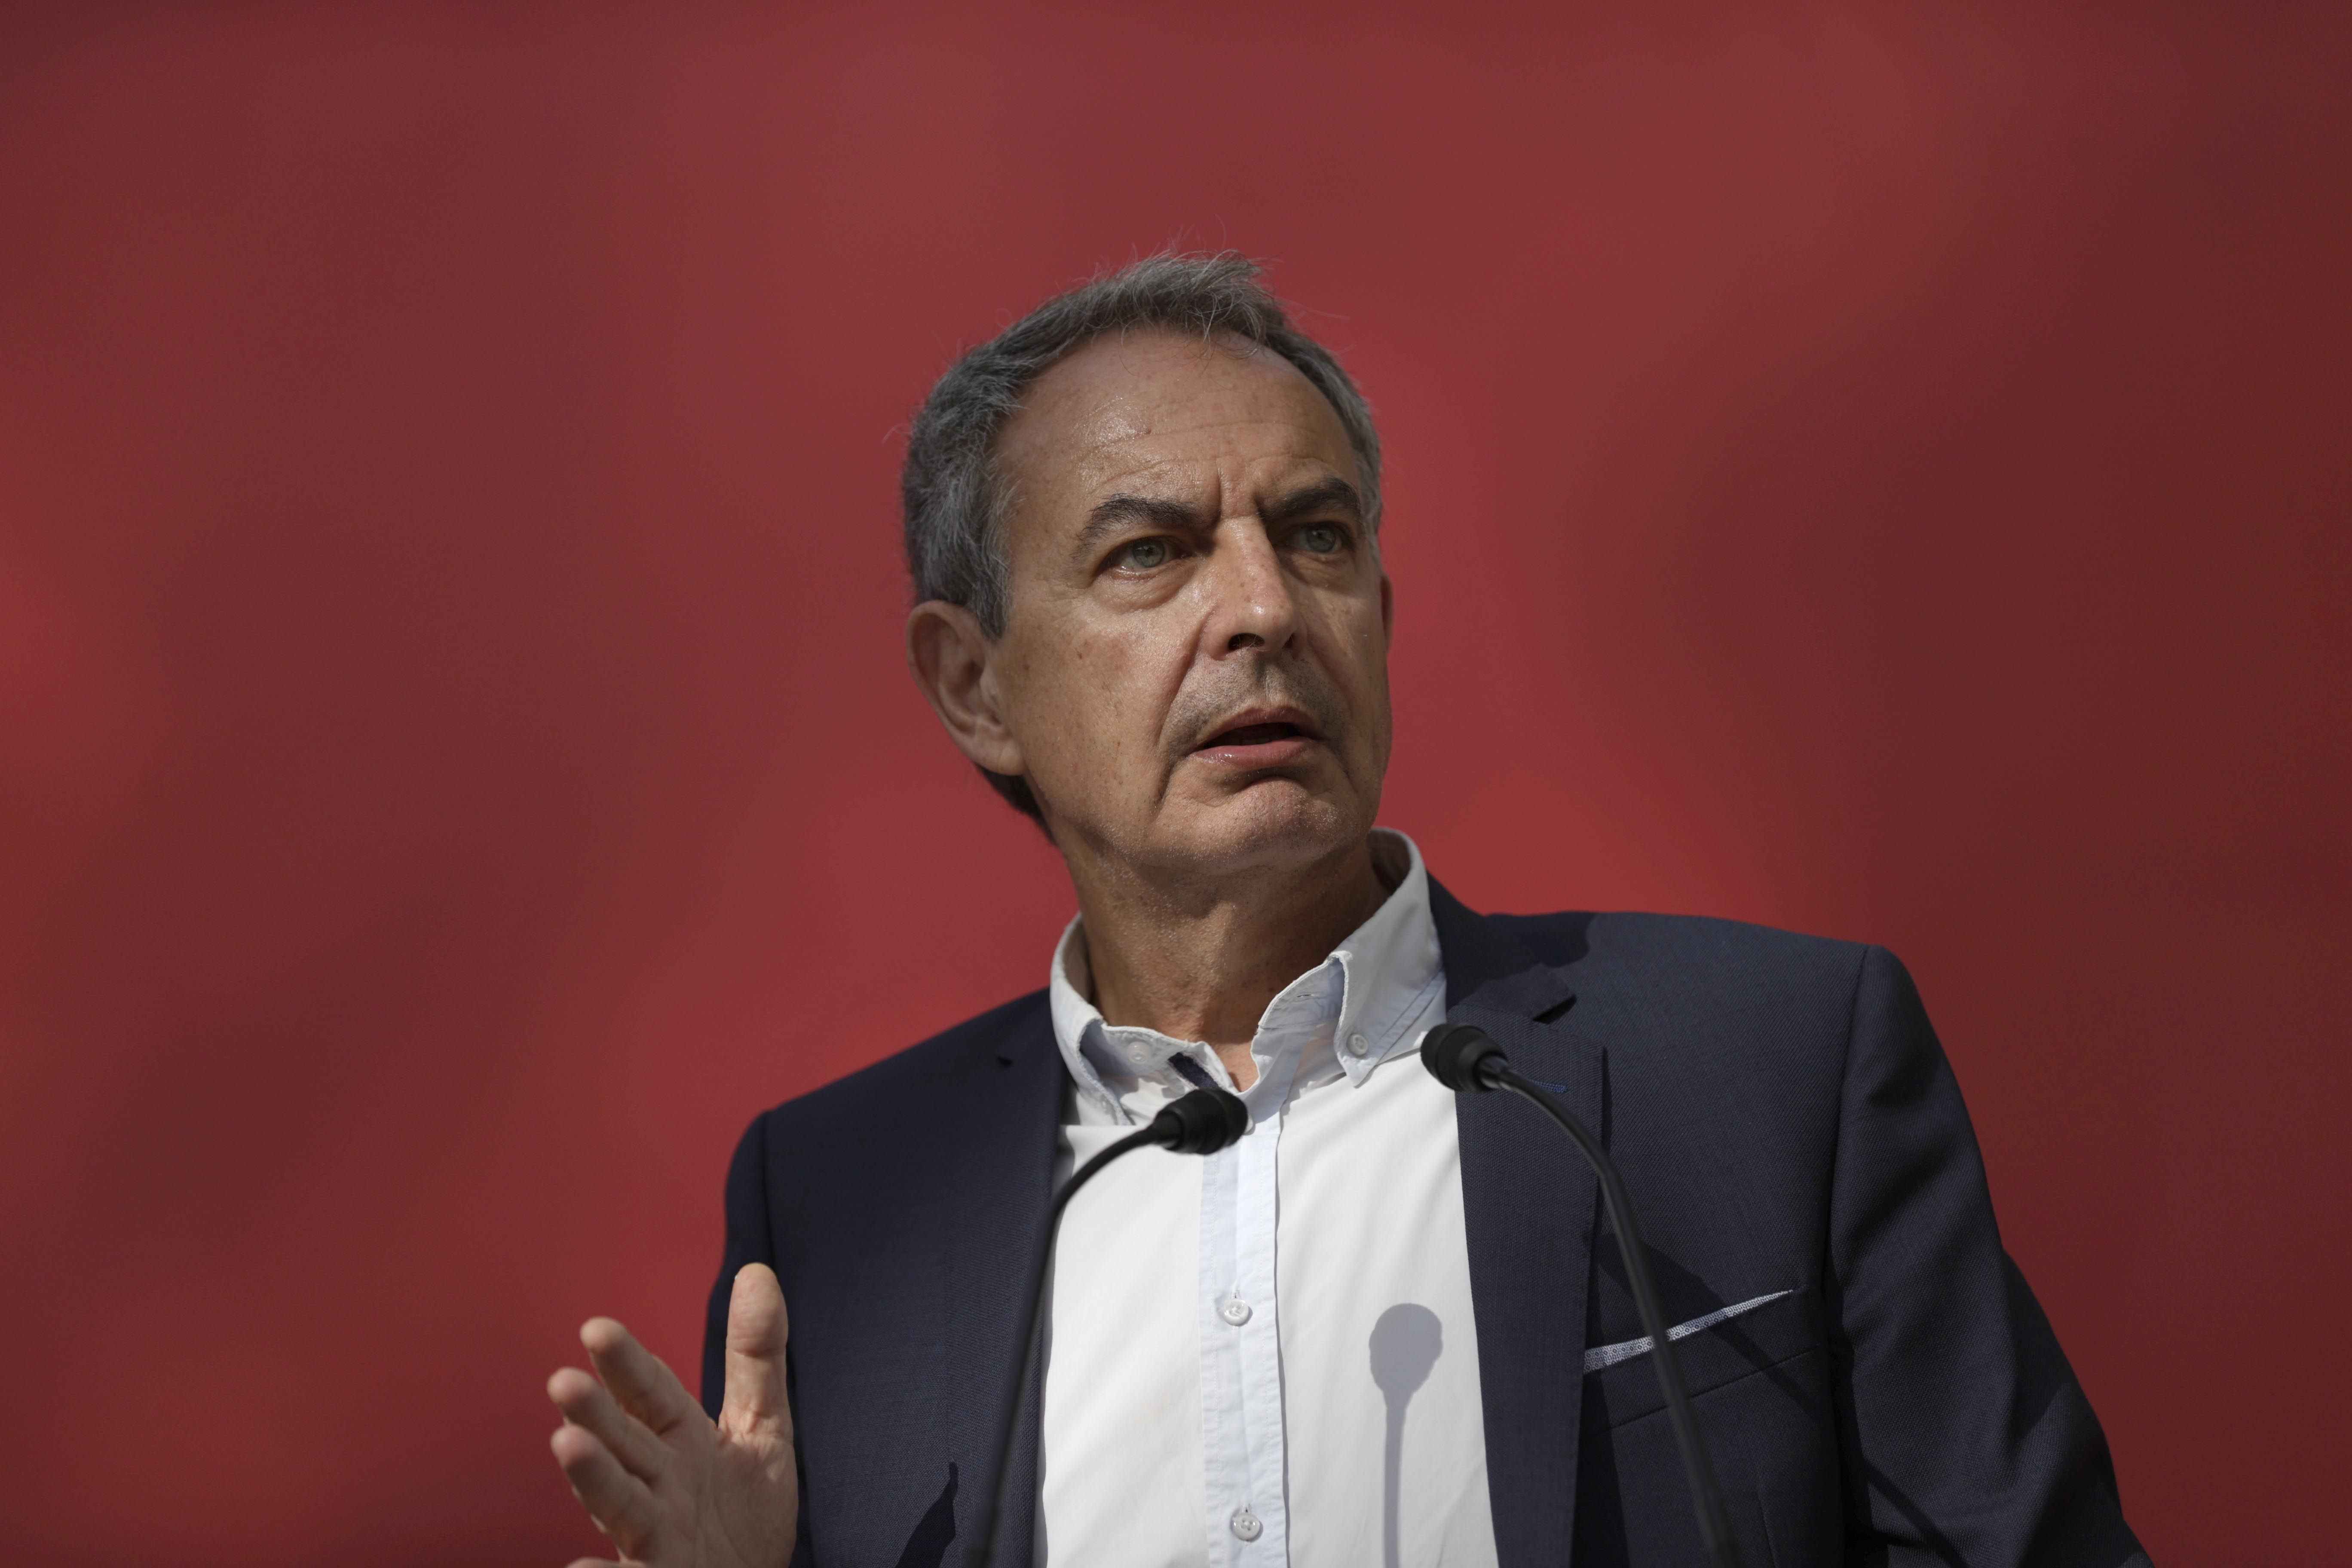 Jose Luis Zapatero